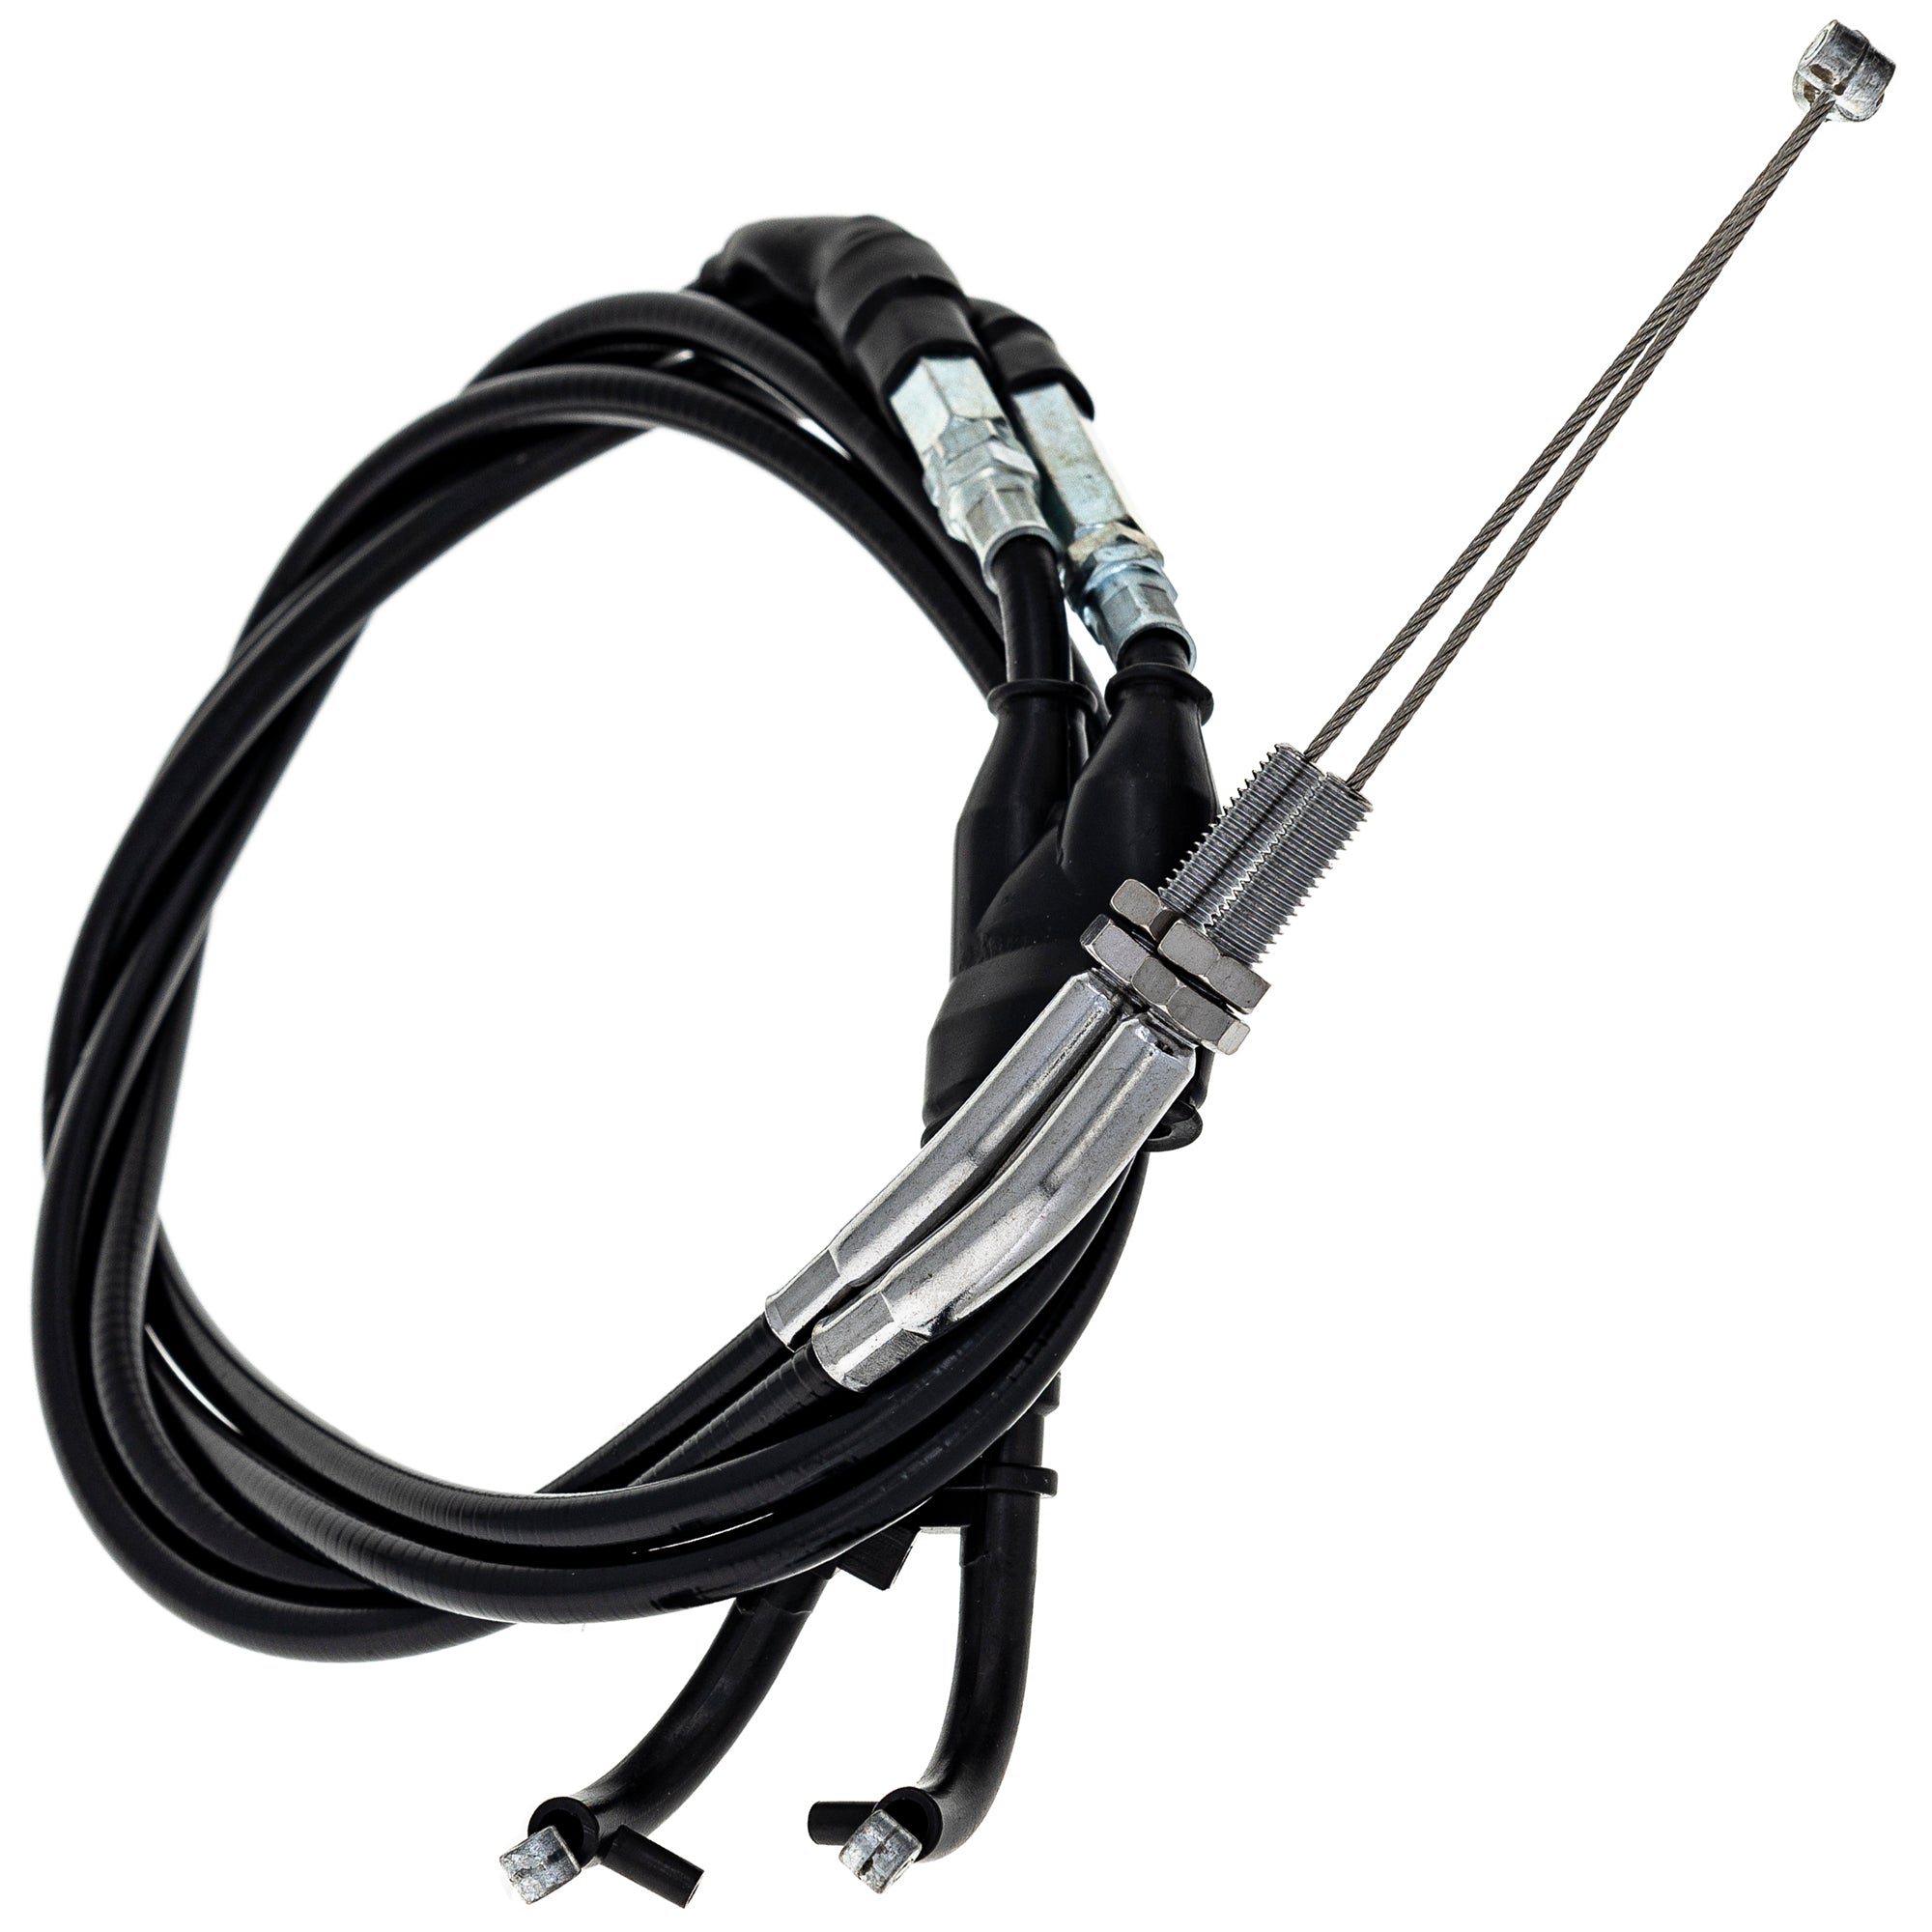 Push Pull Throttle Cable for Husqvarna SM610 SMR400 SMR450 SMR510